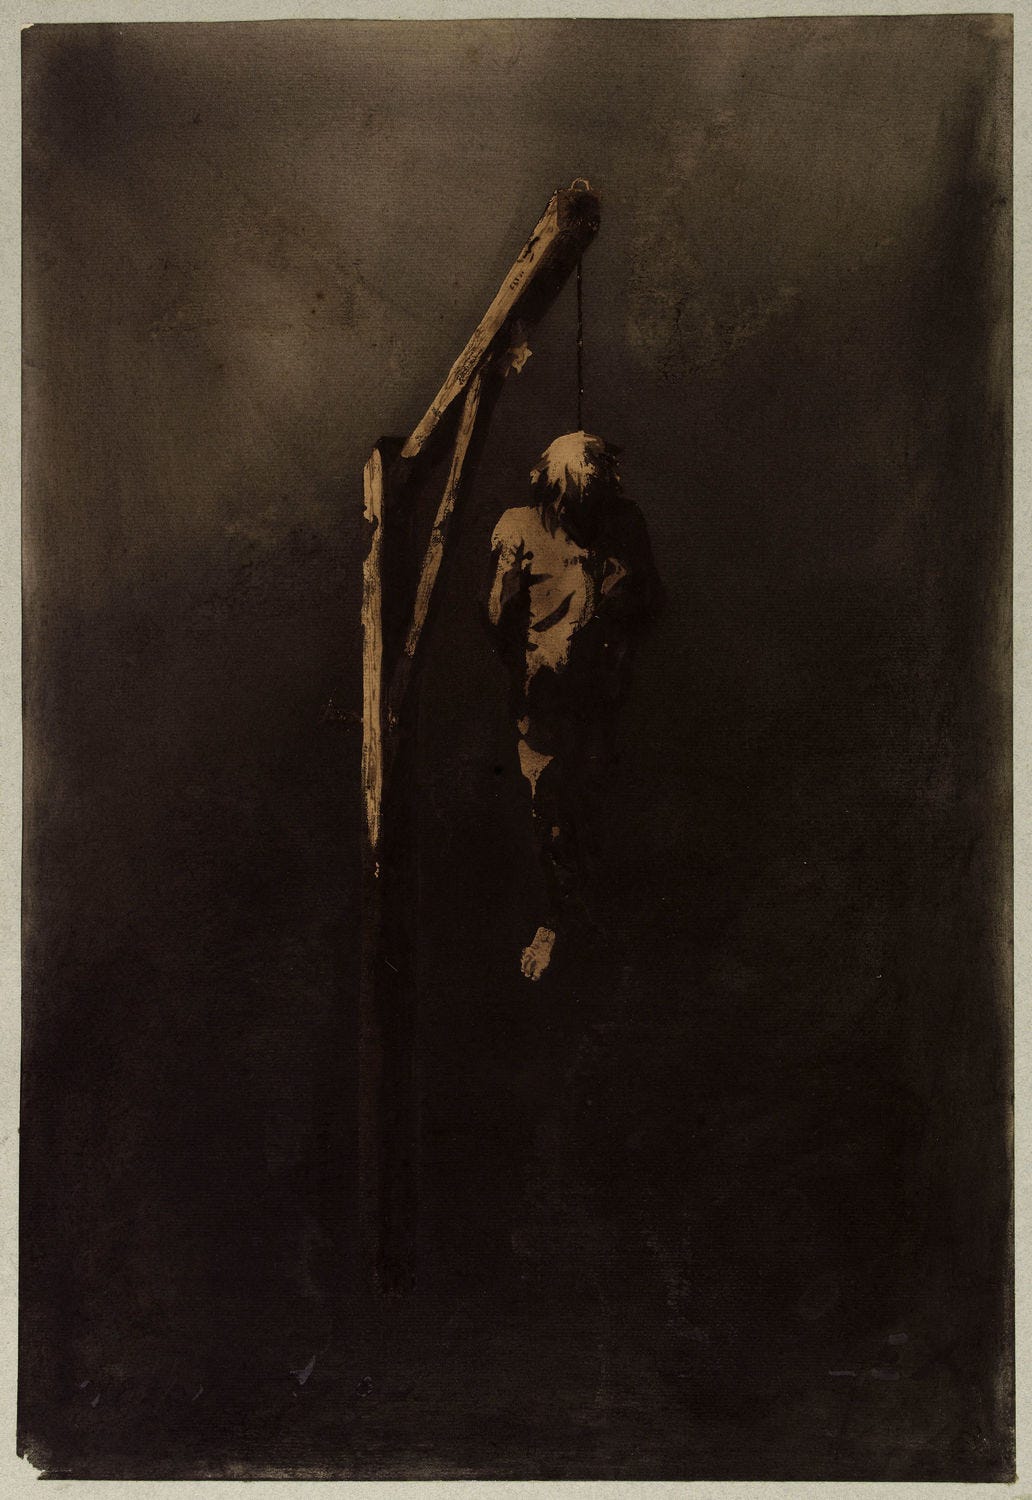 Victor Hugo, Ecce Lex (Le pendu) (Ecce Lex [hanged man]), 1854. Brown ink, brown and black wash, graphite, charcoal, and white gouache on paper. 20 × 13 3/4 in. (50.8 × 34.9 cm). Maisons de Victor Hugo, Paris / Guernesey. MVHP.D.967 © Maisons de Victor Hugo, Paris / Guernesey / Roger-Viollet